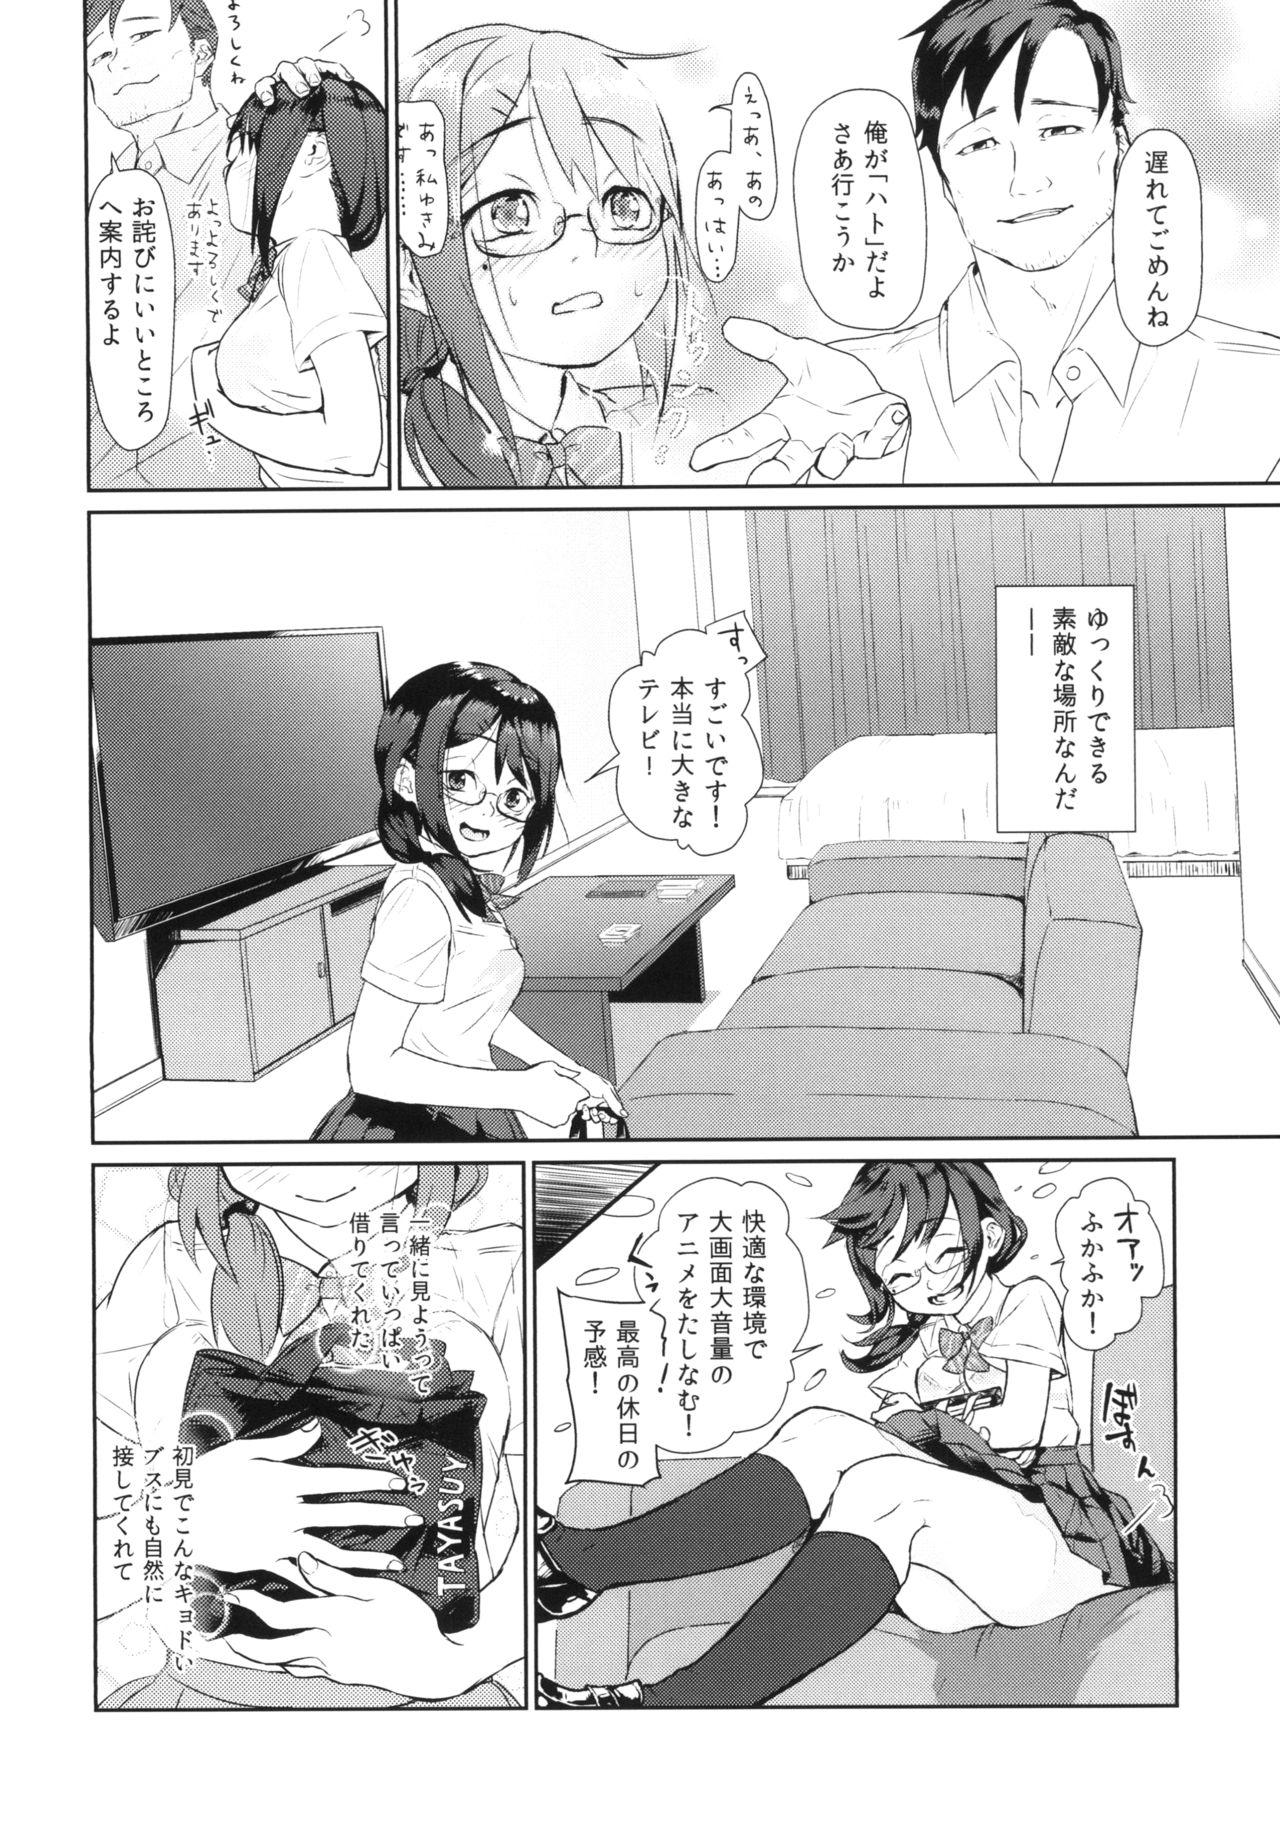 Cavala ハンネしか知らない Social Net-Sex - Original Sentones - Page 8